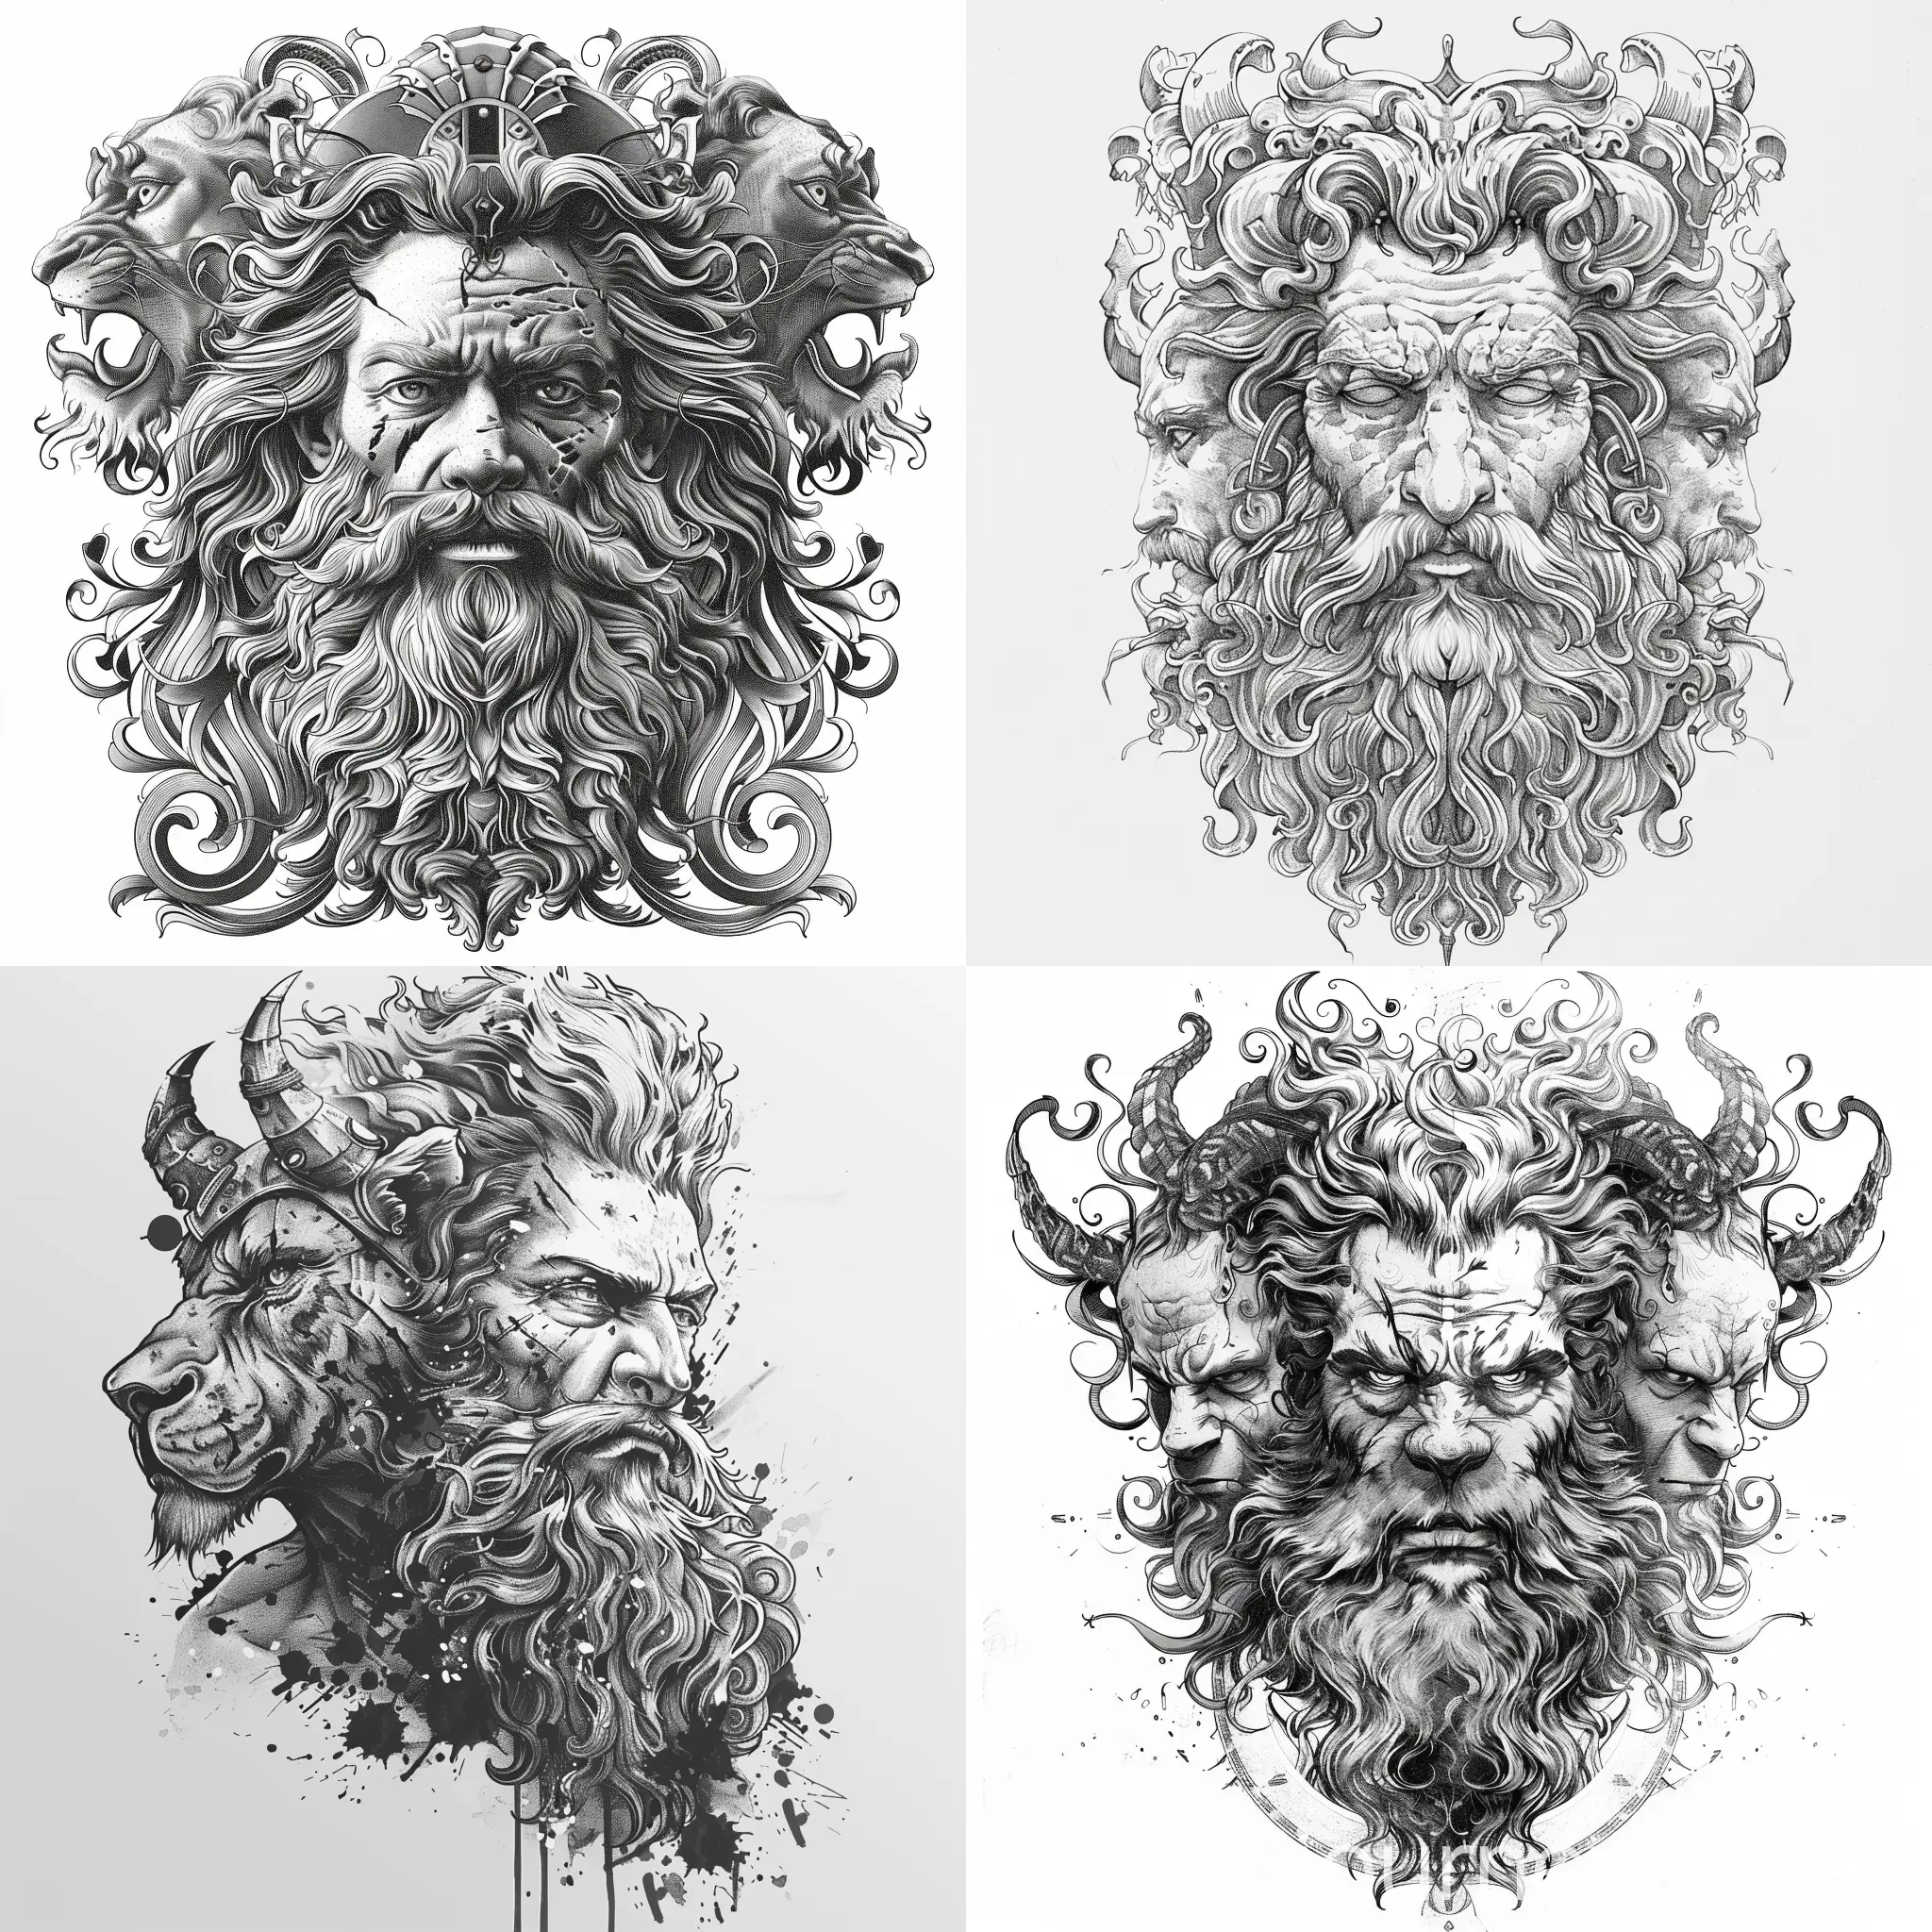 Furious-Zeus-Portrait-of-the-Greek-God-with-Lions-Head